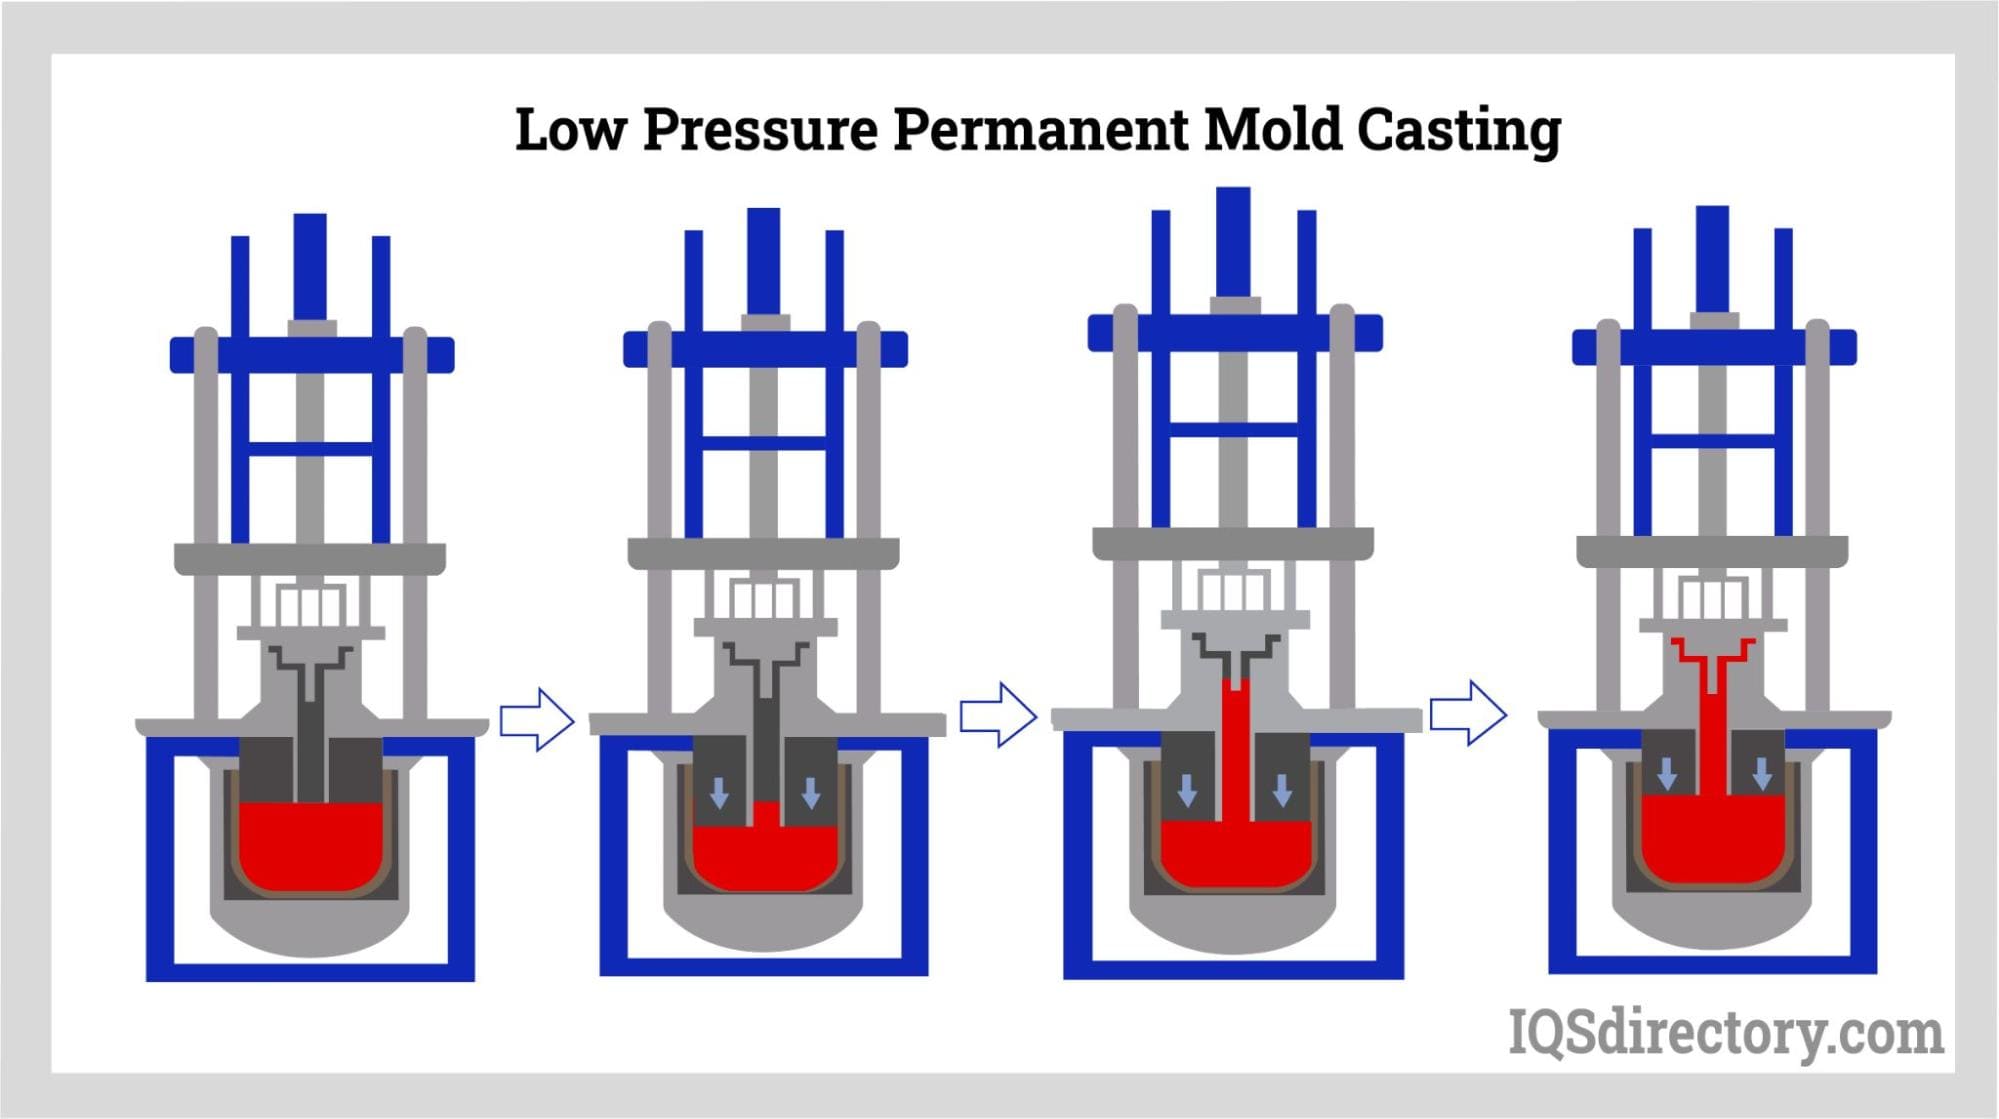 Low Pressure Permanent Mold Casting